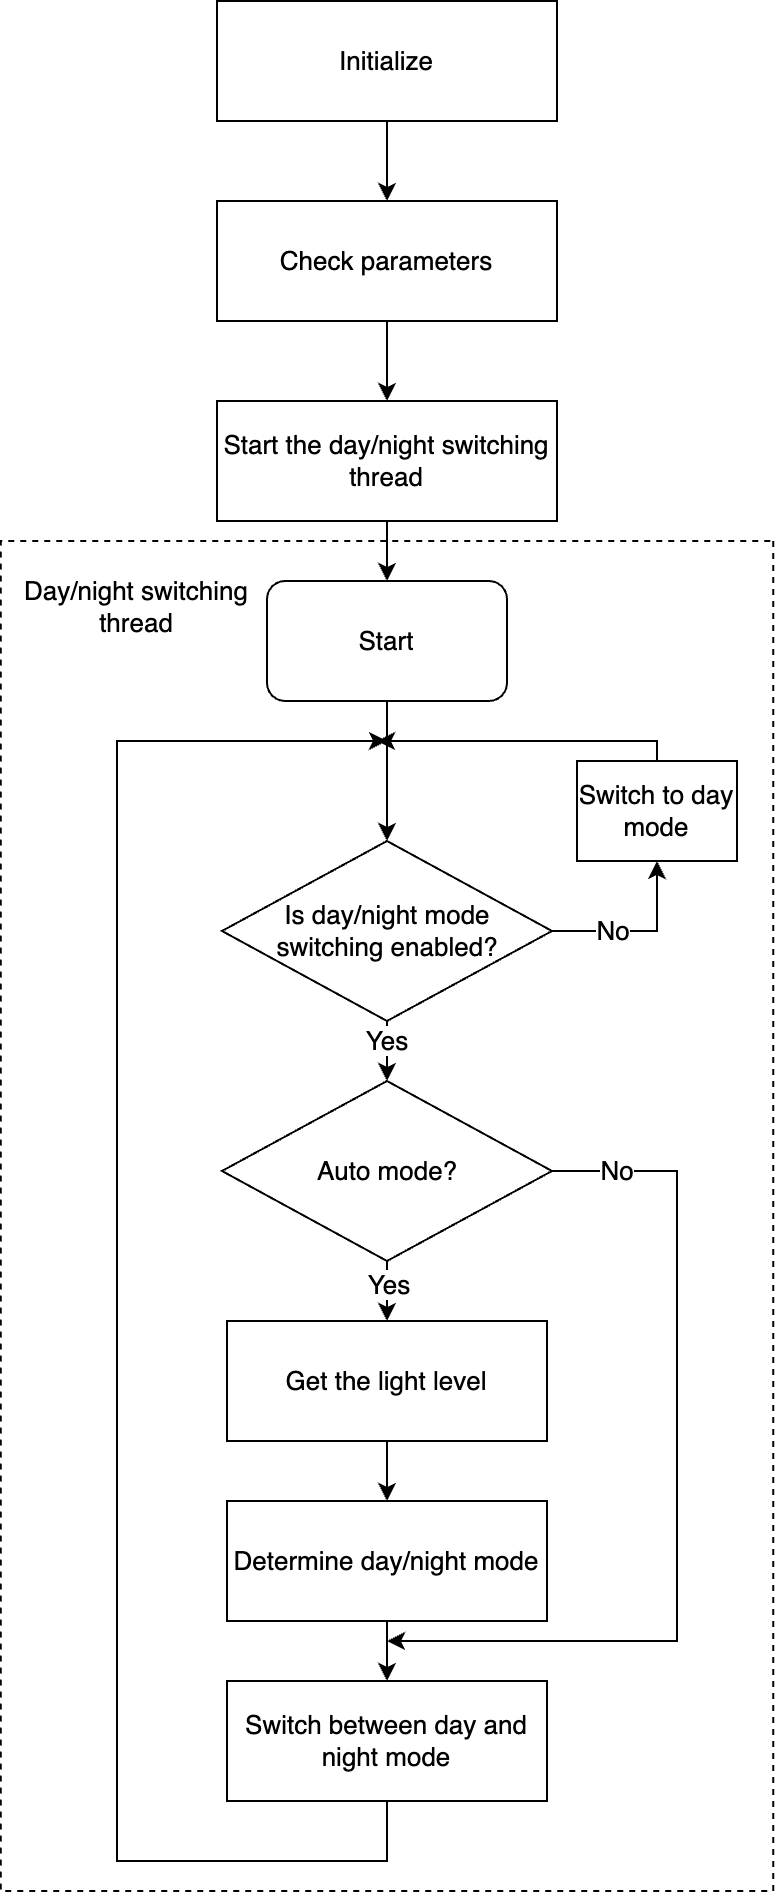 Day/Night Mode Switching